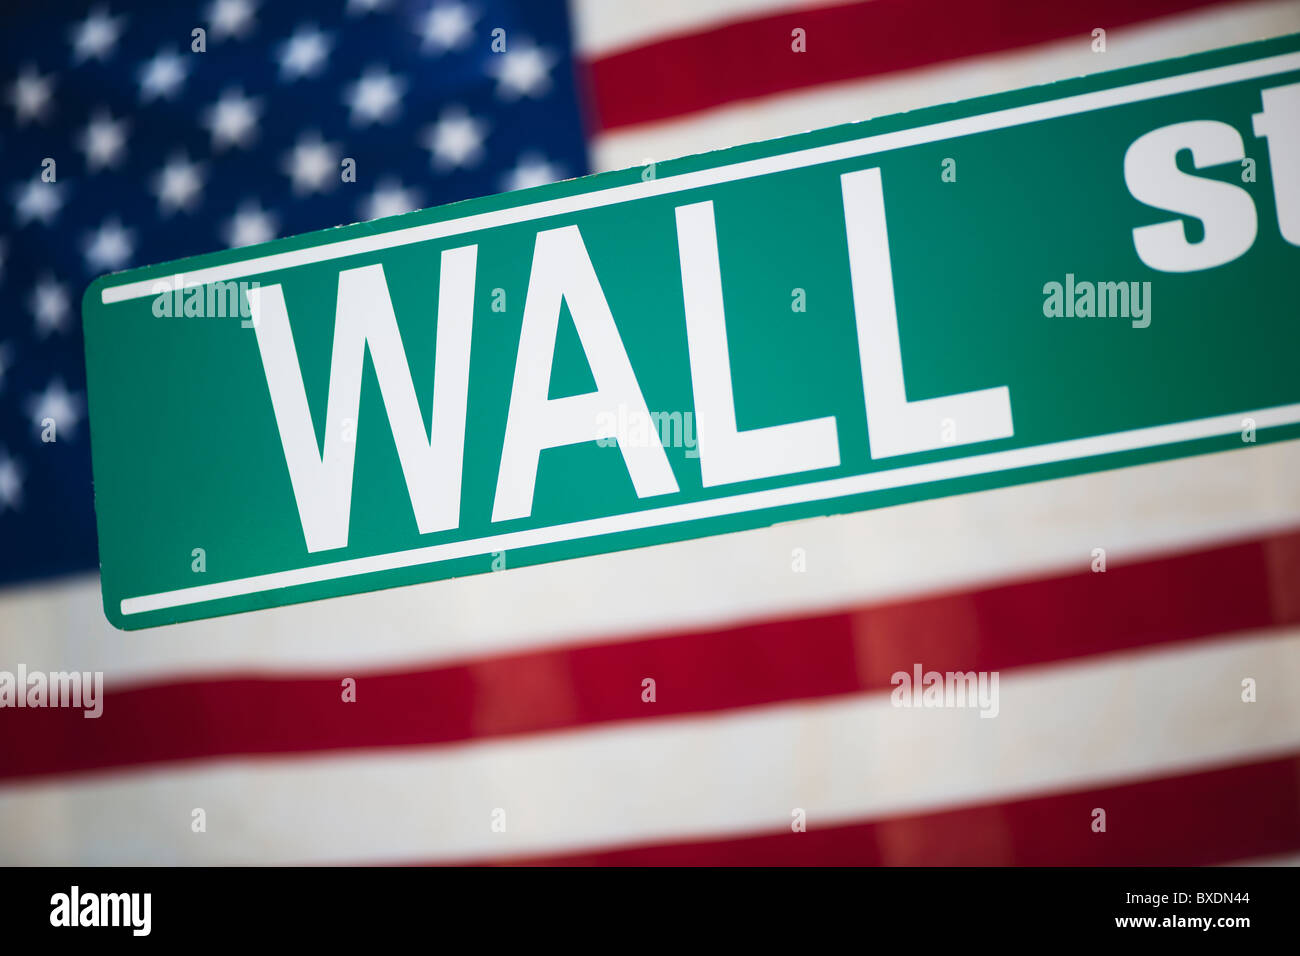 Wall Street sign Stock Photo